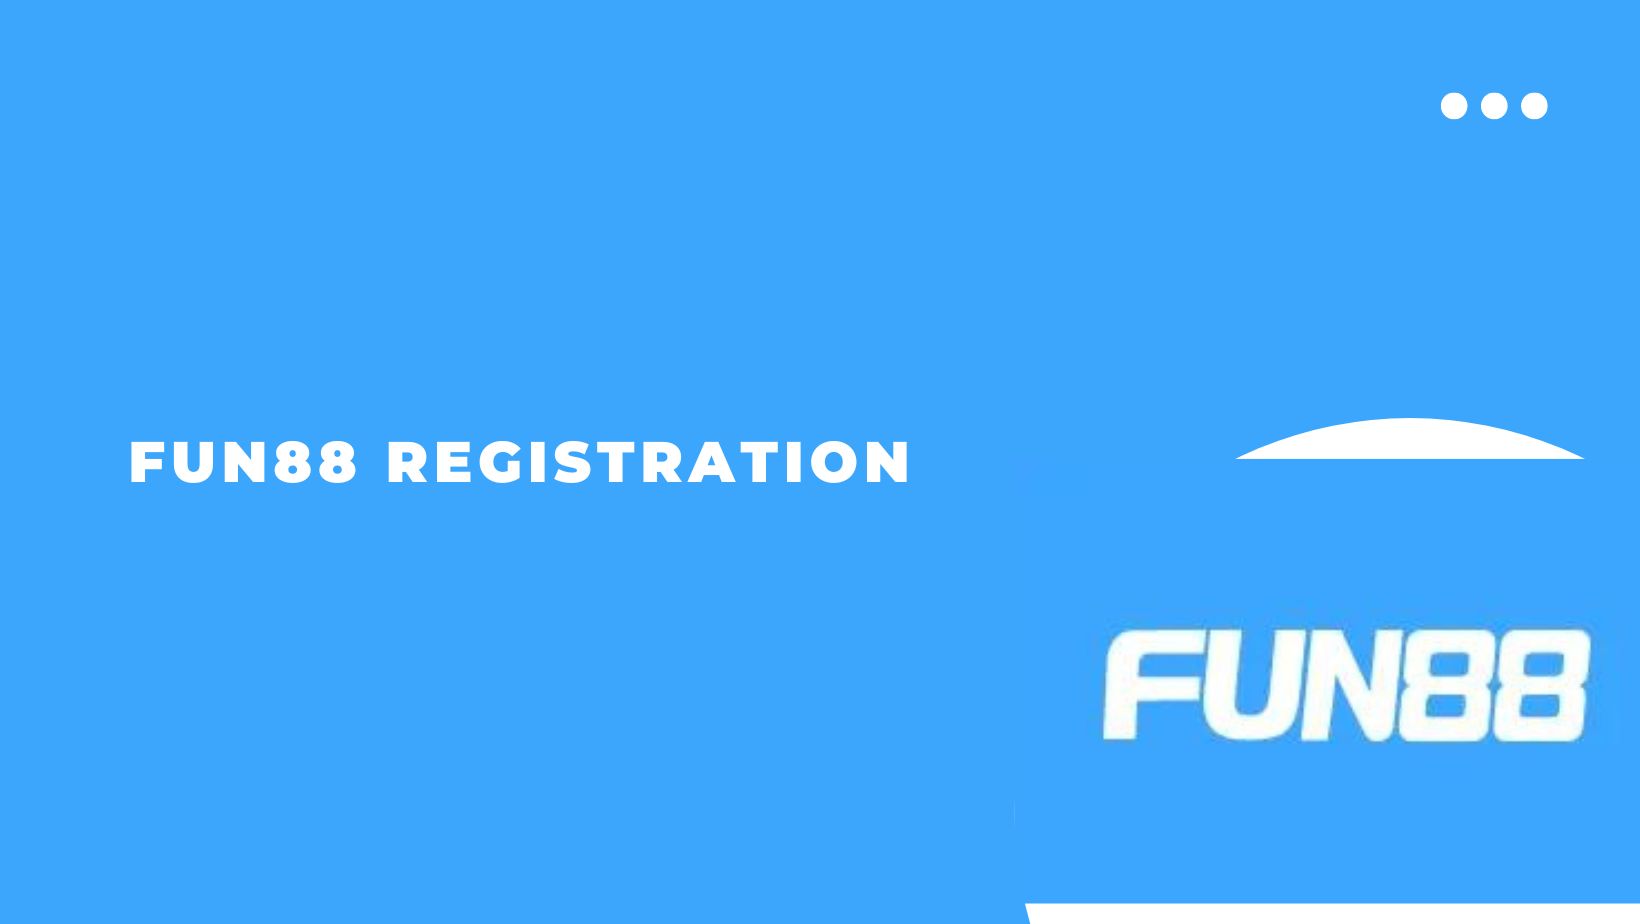 Fun88 registration